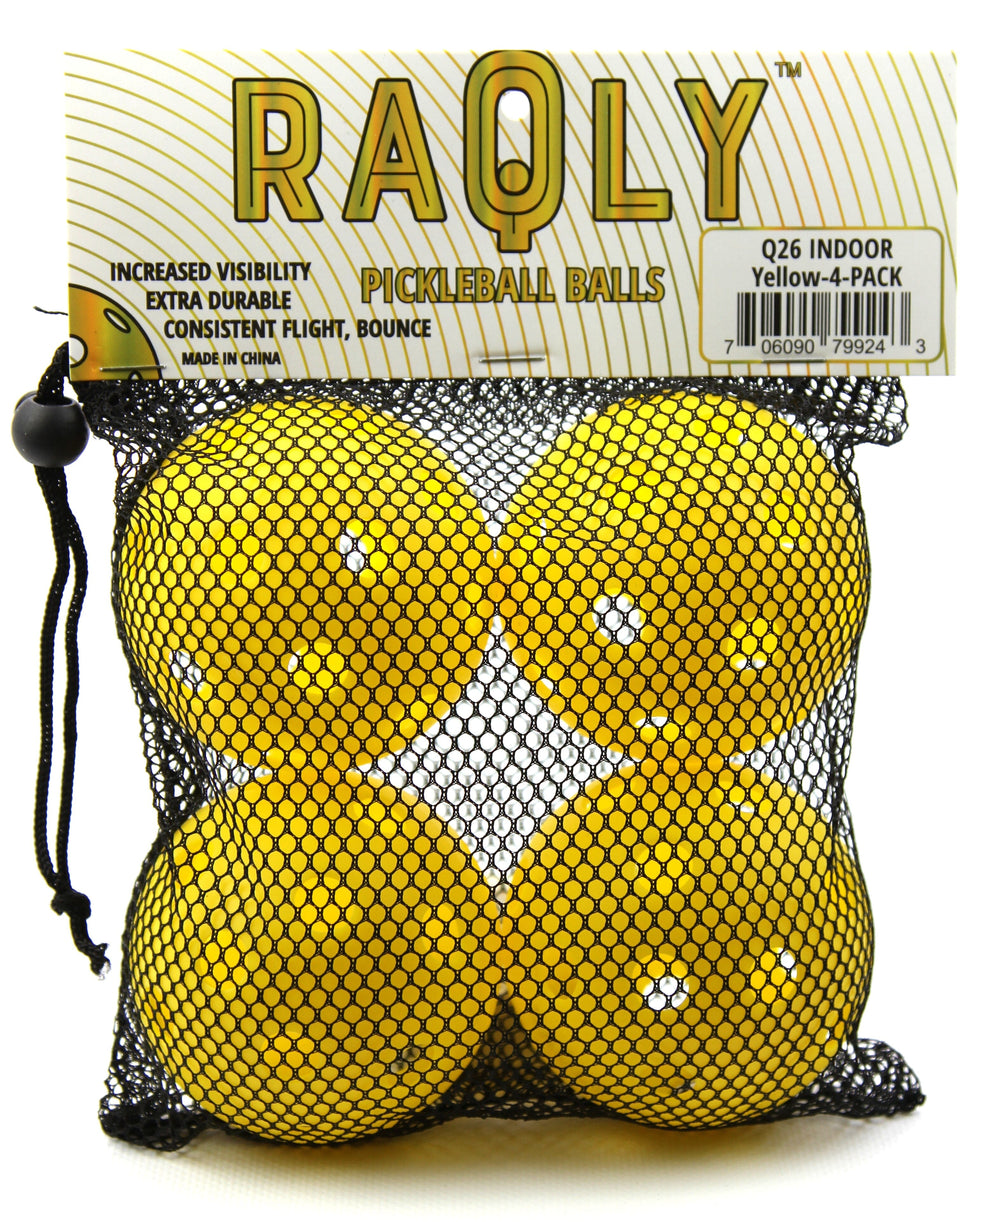 RAQLY Pickleball Q26 Indoor Ball Pickleball Balls RAQLY Yellow 4-pack 